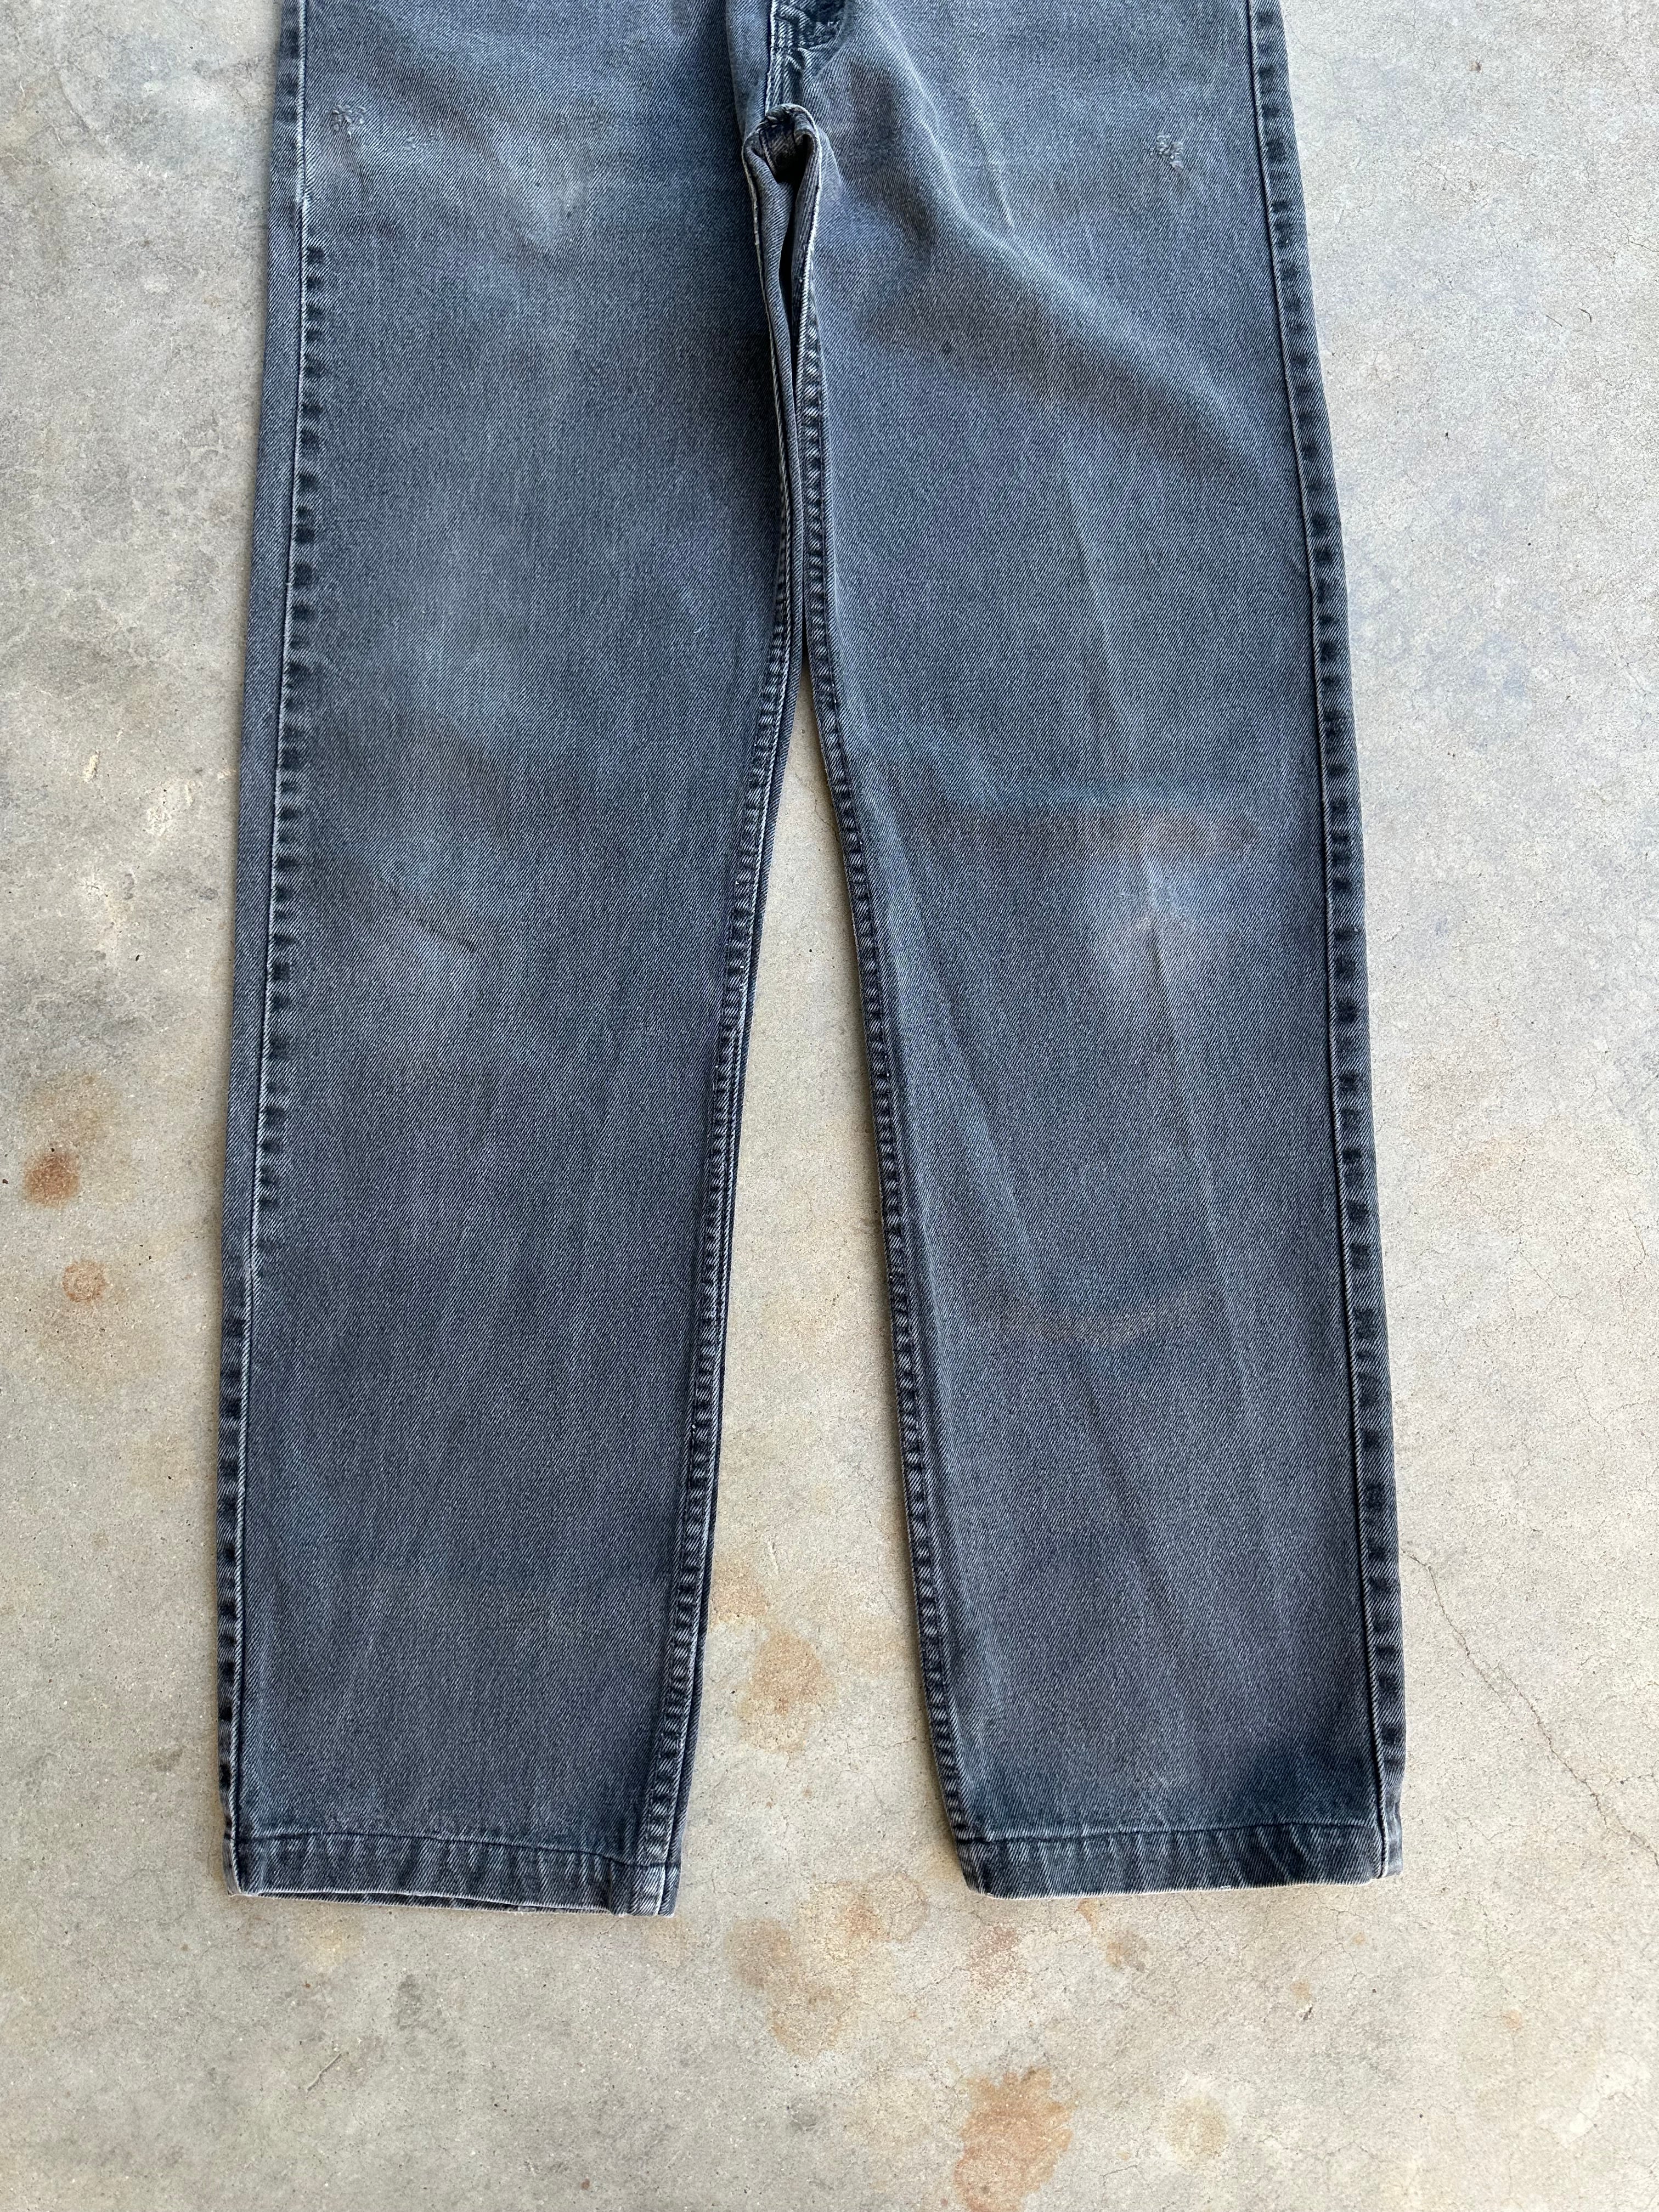 1990s Levi’s 505 Faded Black Denim Jeans (35"x32")